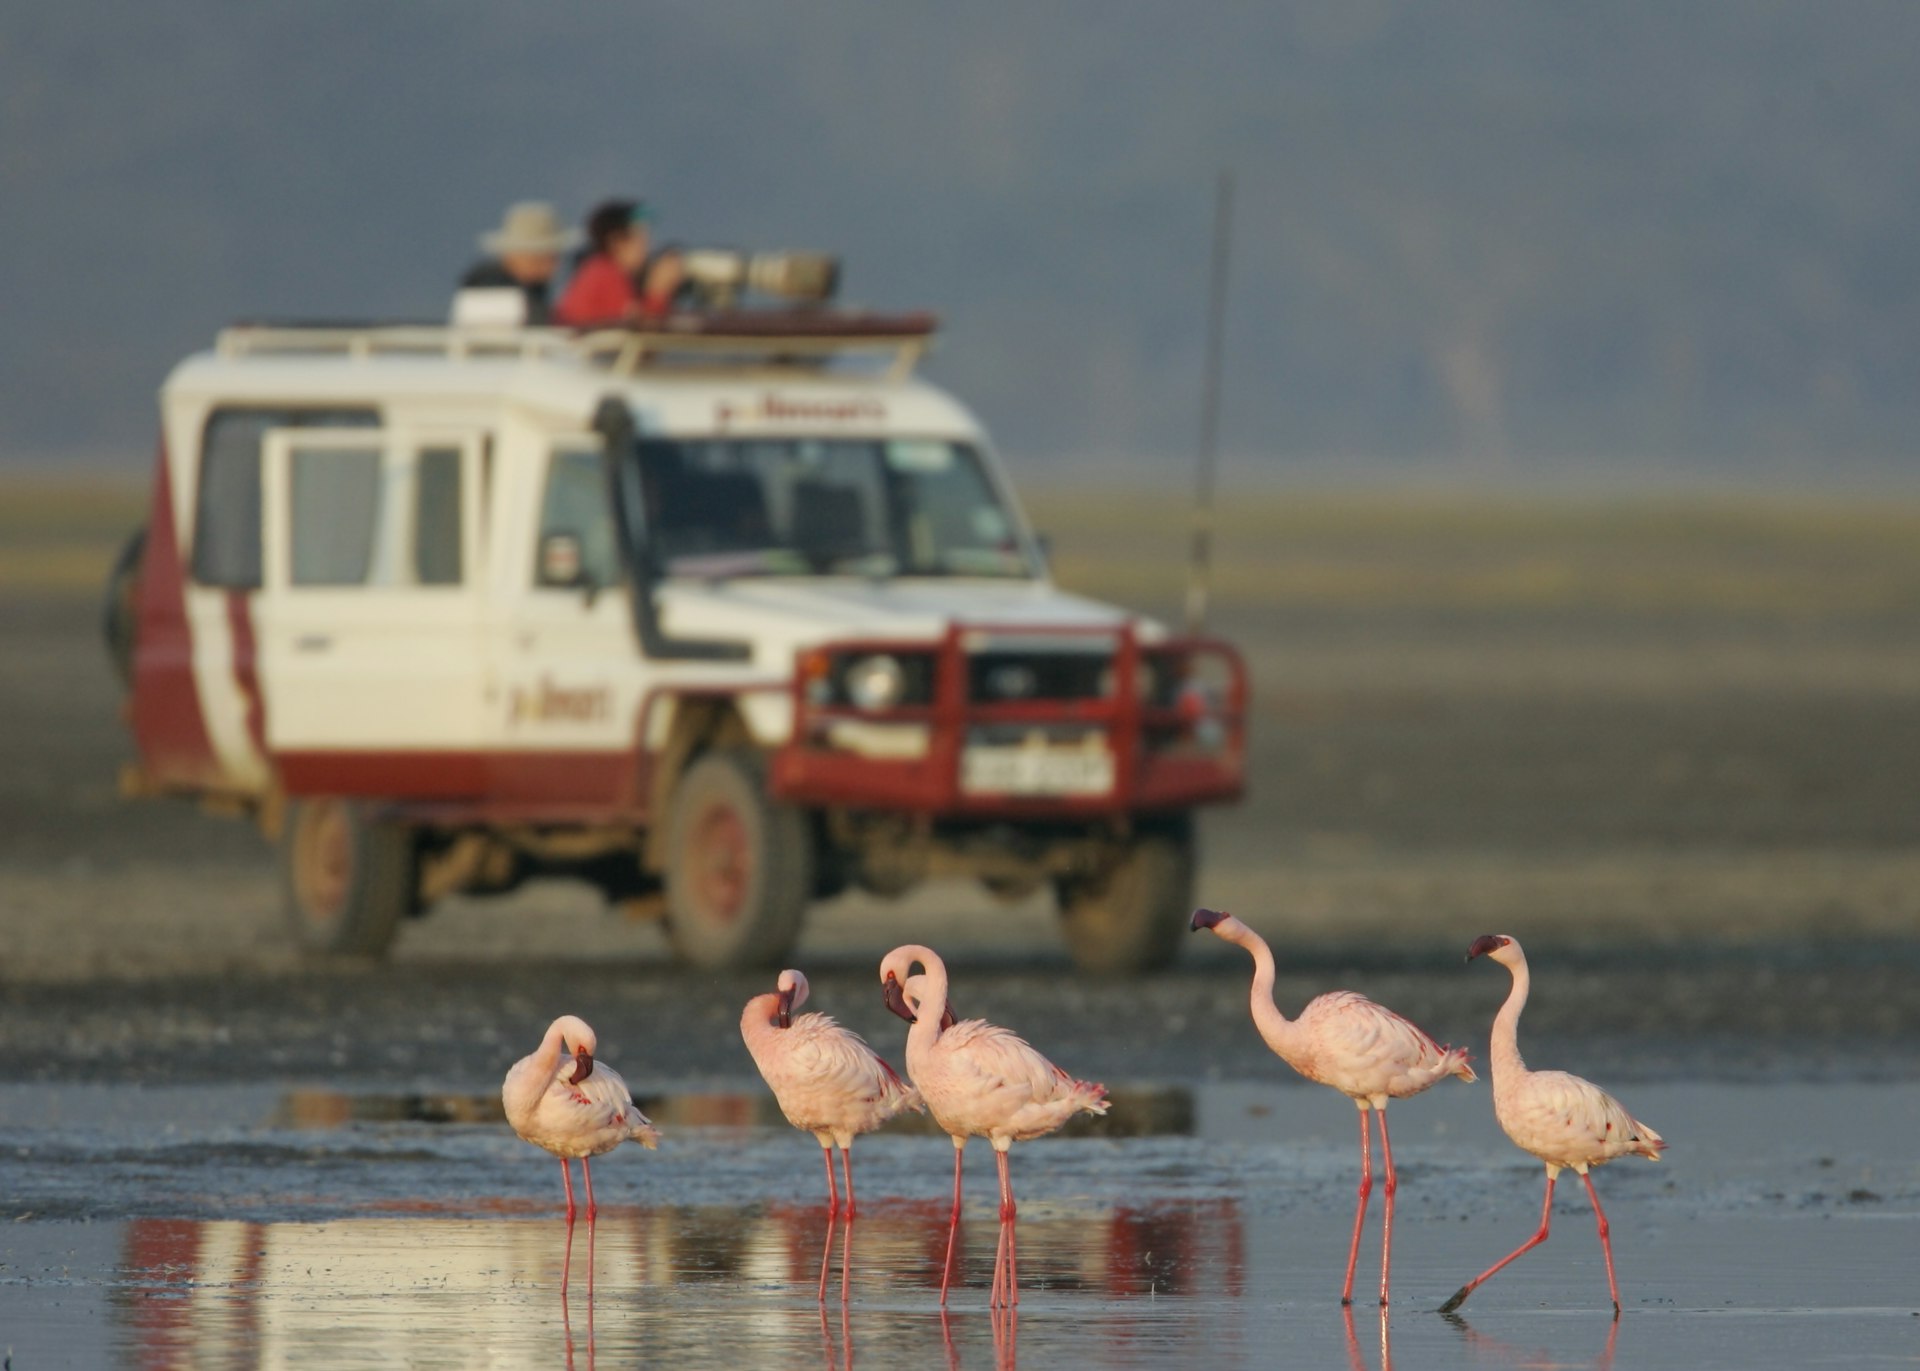 Flamingo watching from safari vehicle in Kenya